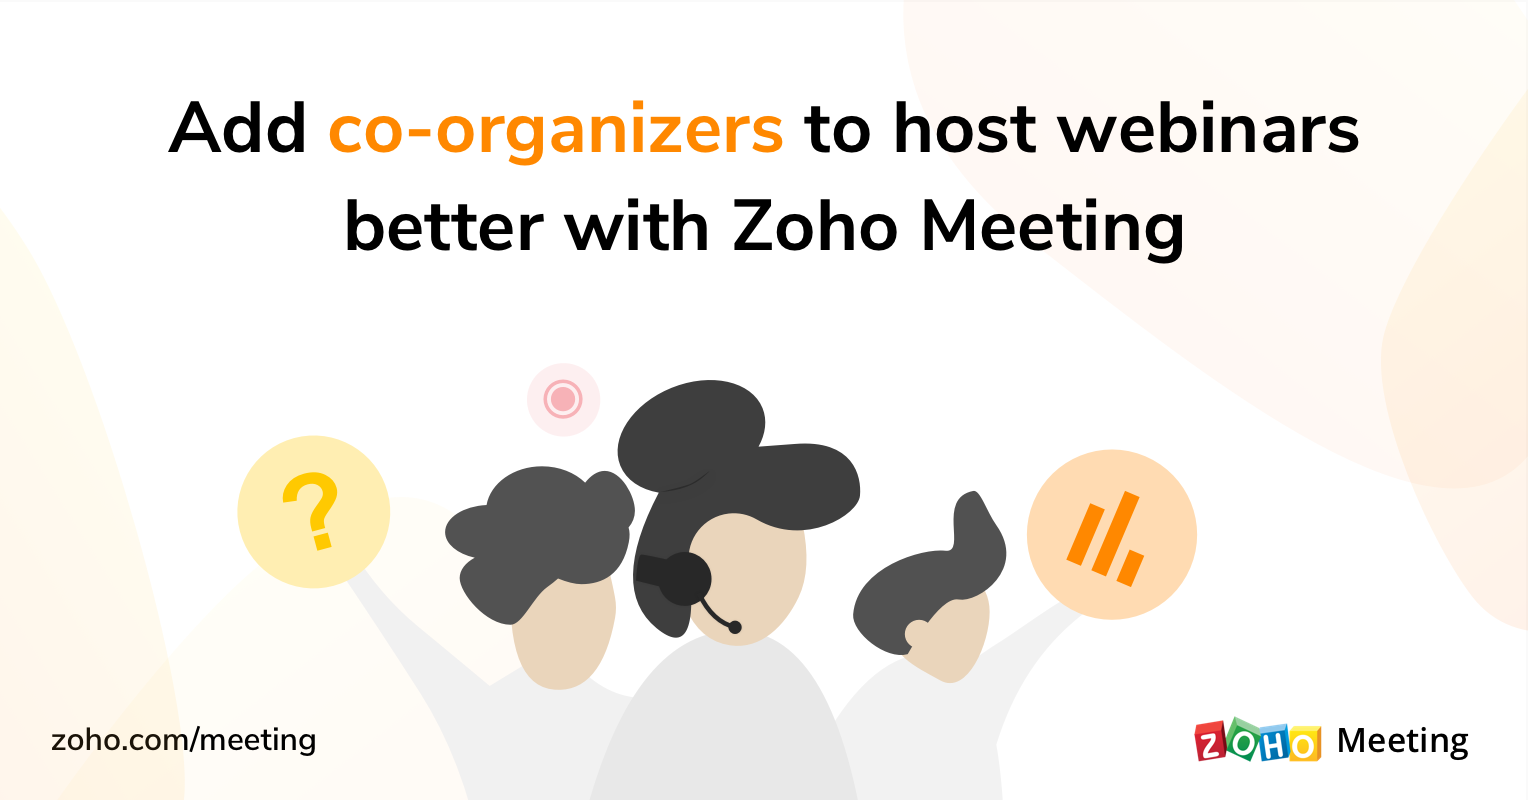 Add co-organizers to host webinars better using Zoho Meeting.